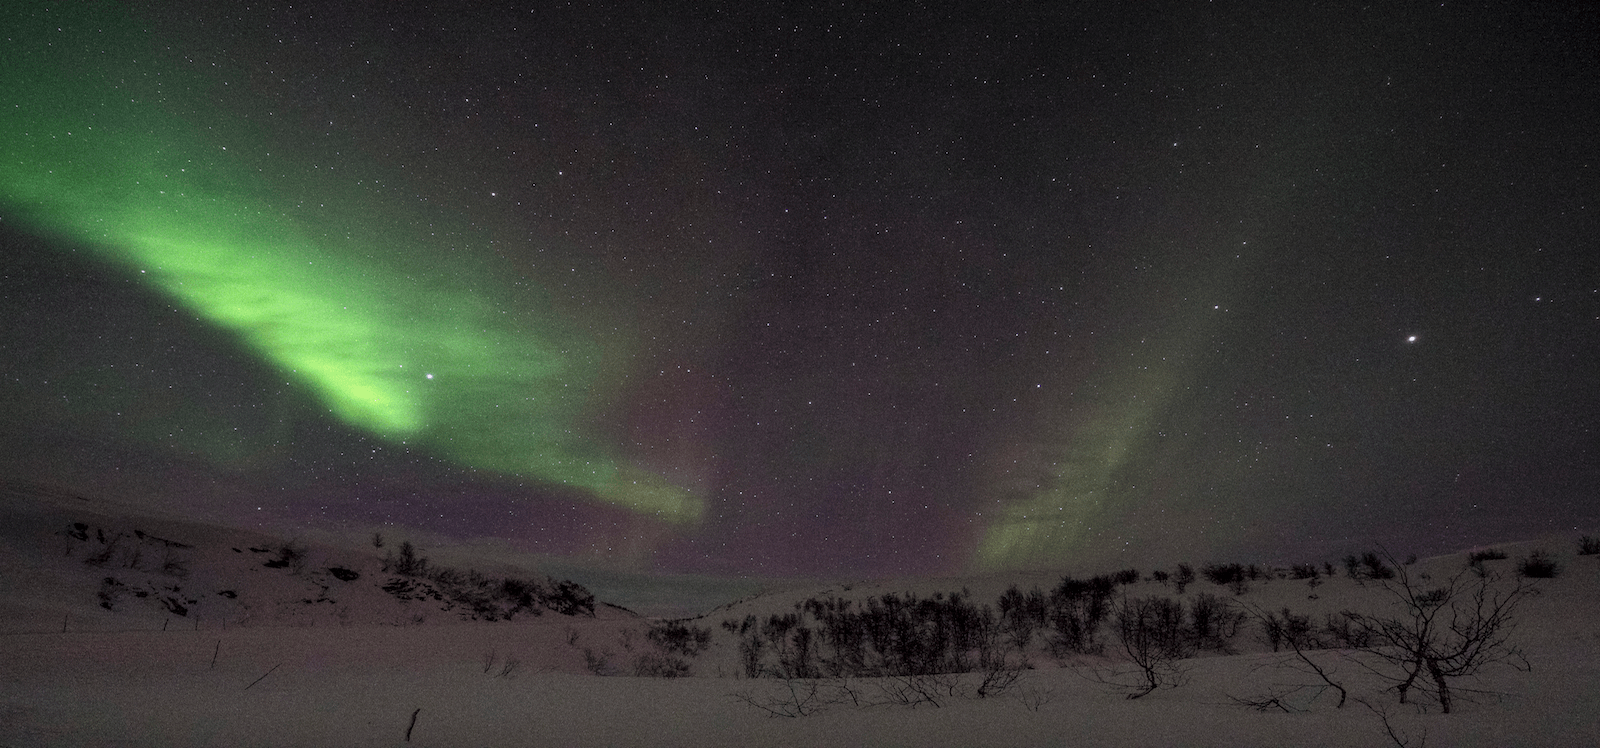 Green northern lights above snow landscape